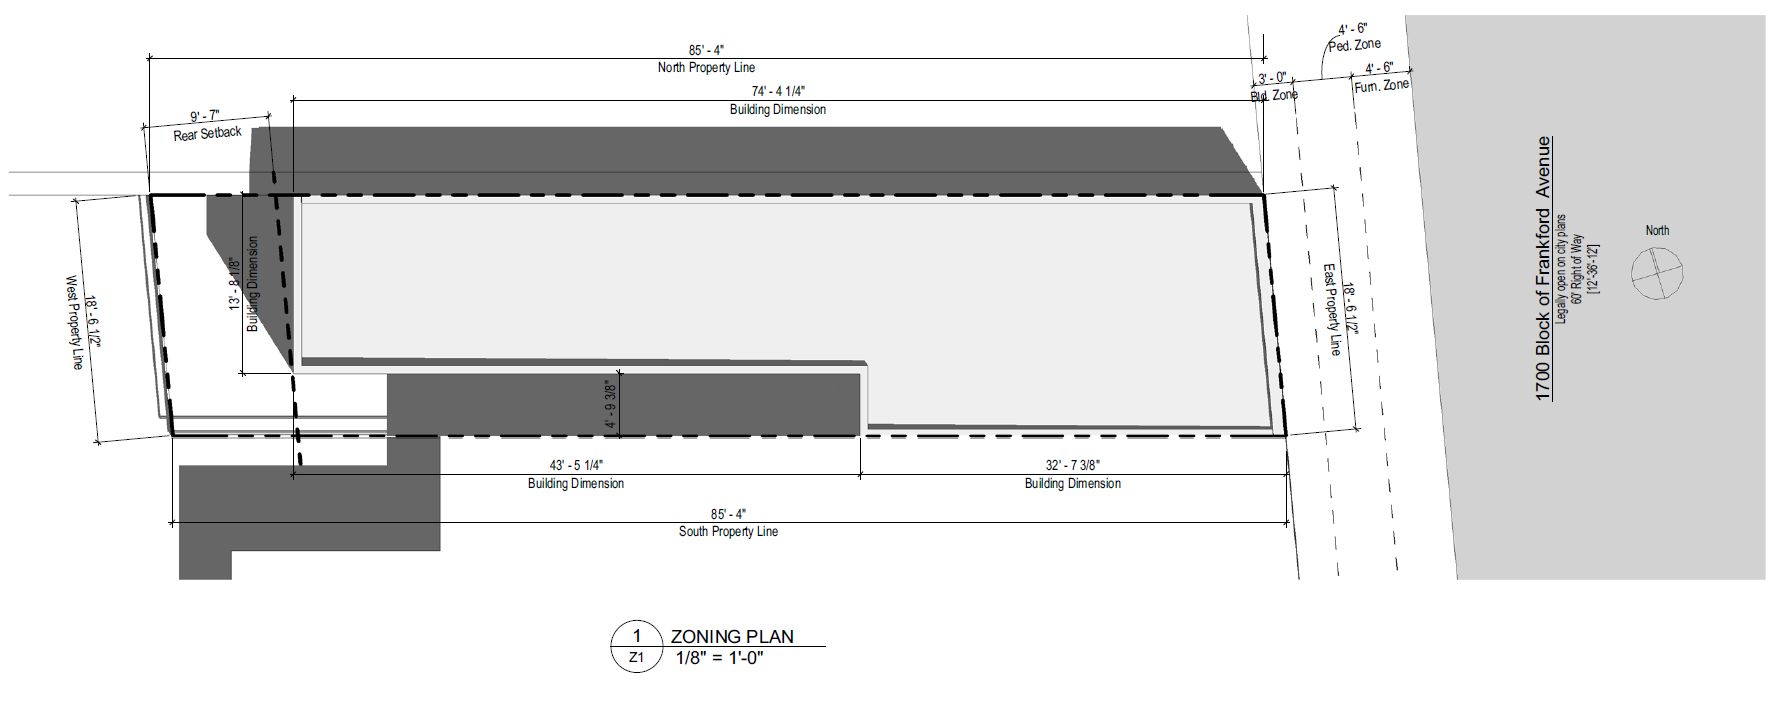 1704 Frankford Avenue. Site plan. Credit: Ambit Architecture via the City of Philadelphia